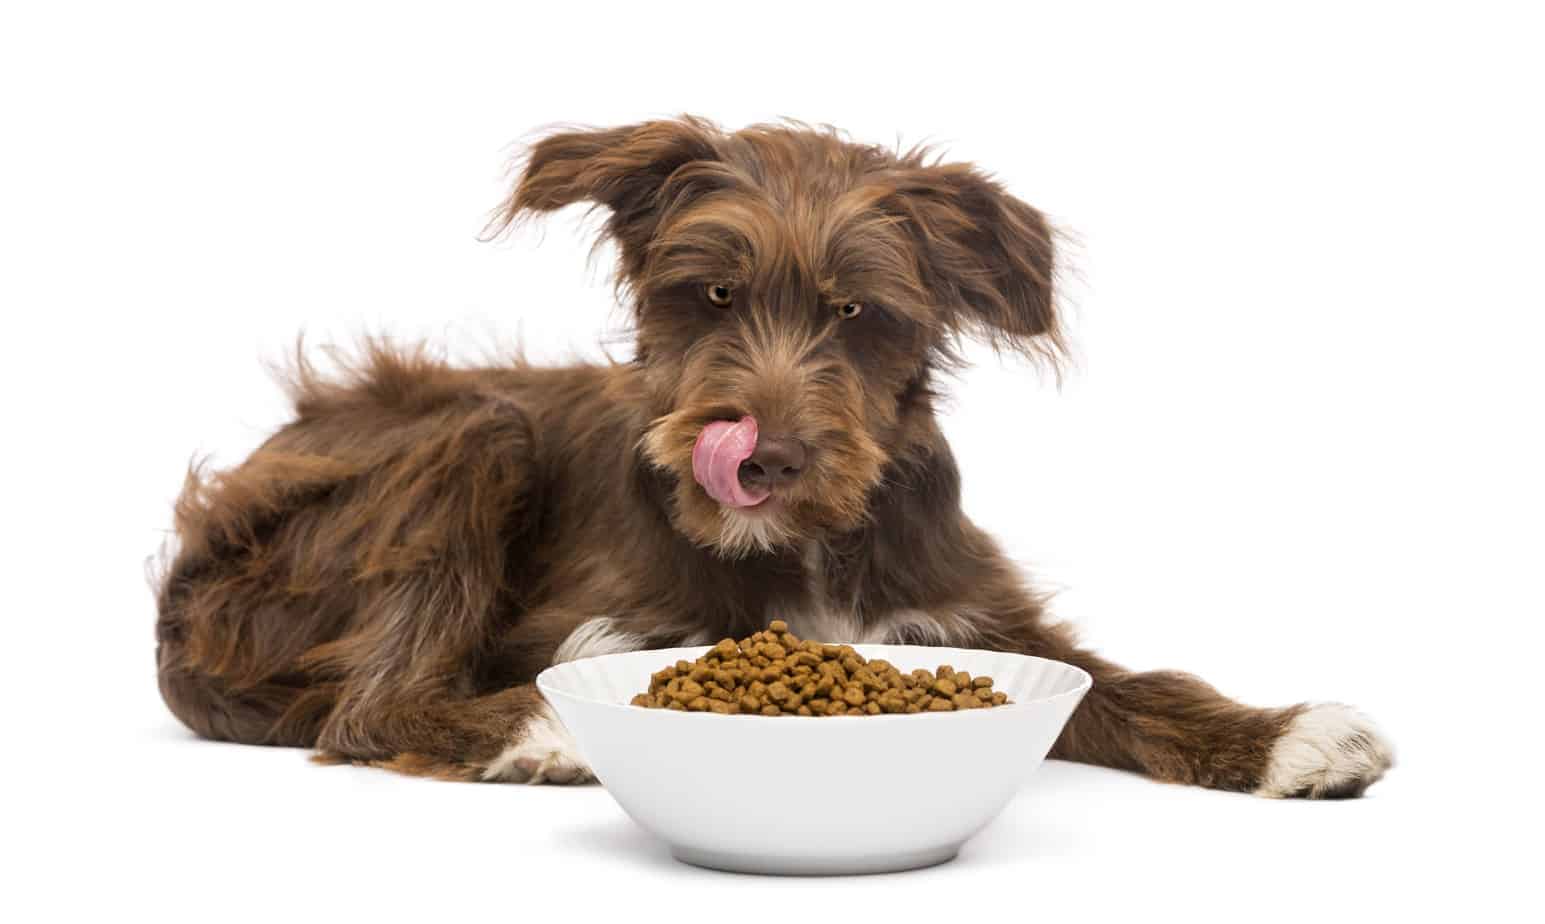 Dog eats environmentally-friendly dog food.